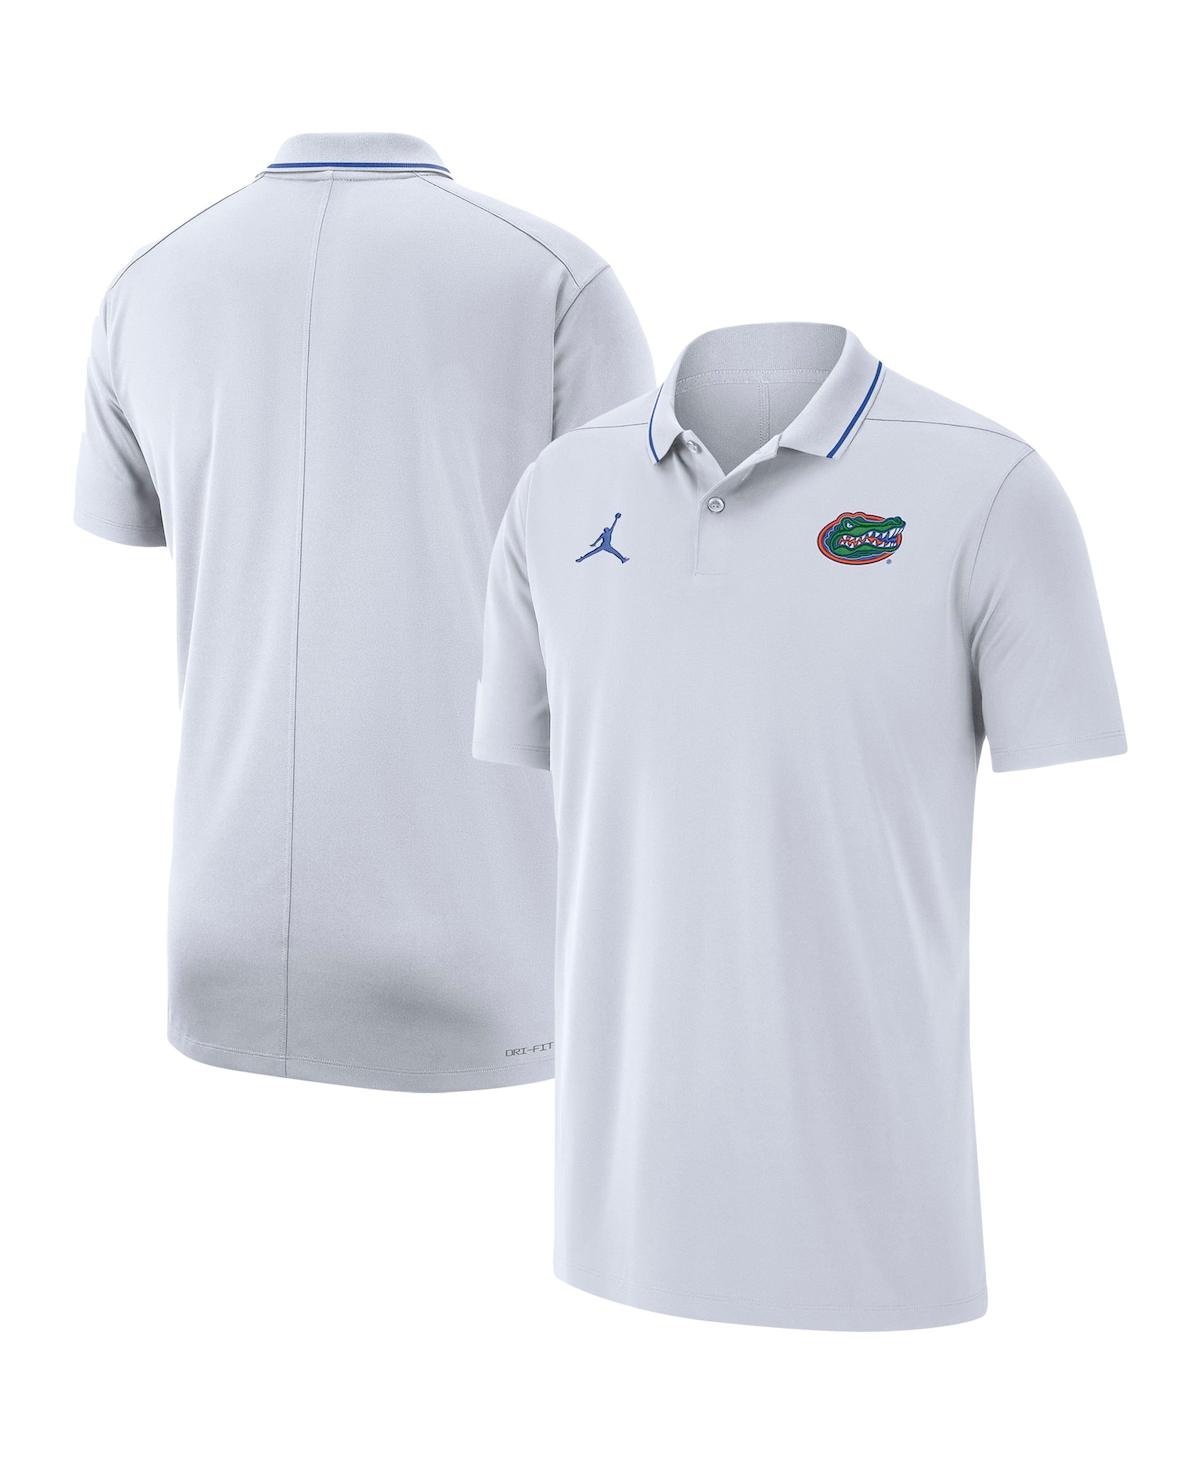 Men's Jordan White Florida Gators Coaches Performance Polo Shirt - White